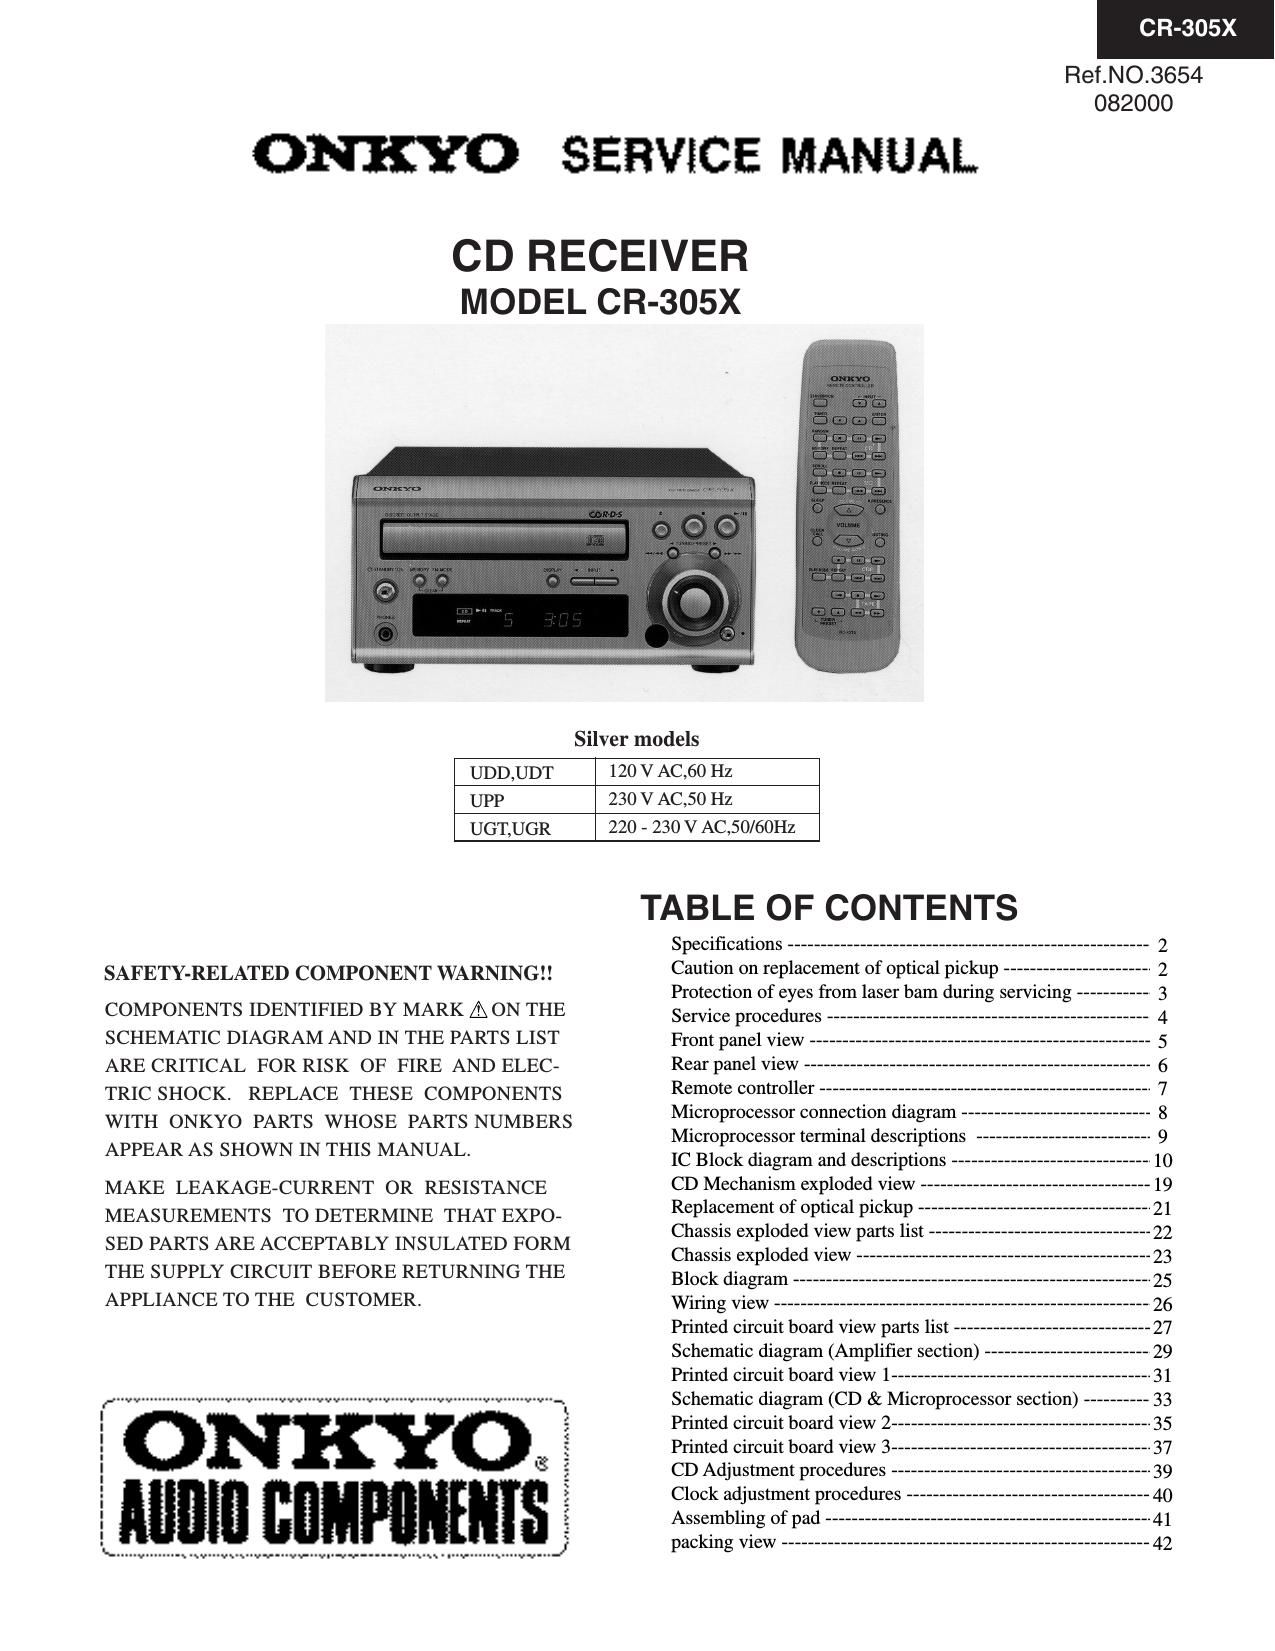 Onkyo CR 305 X Service Manual